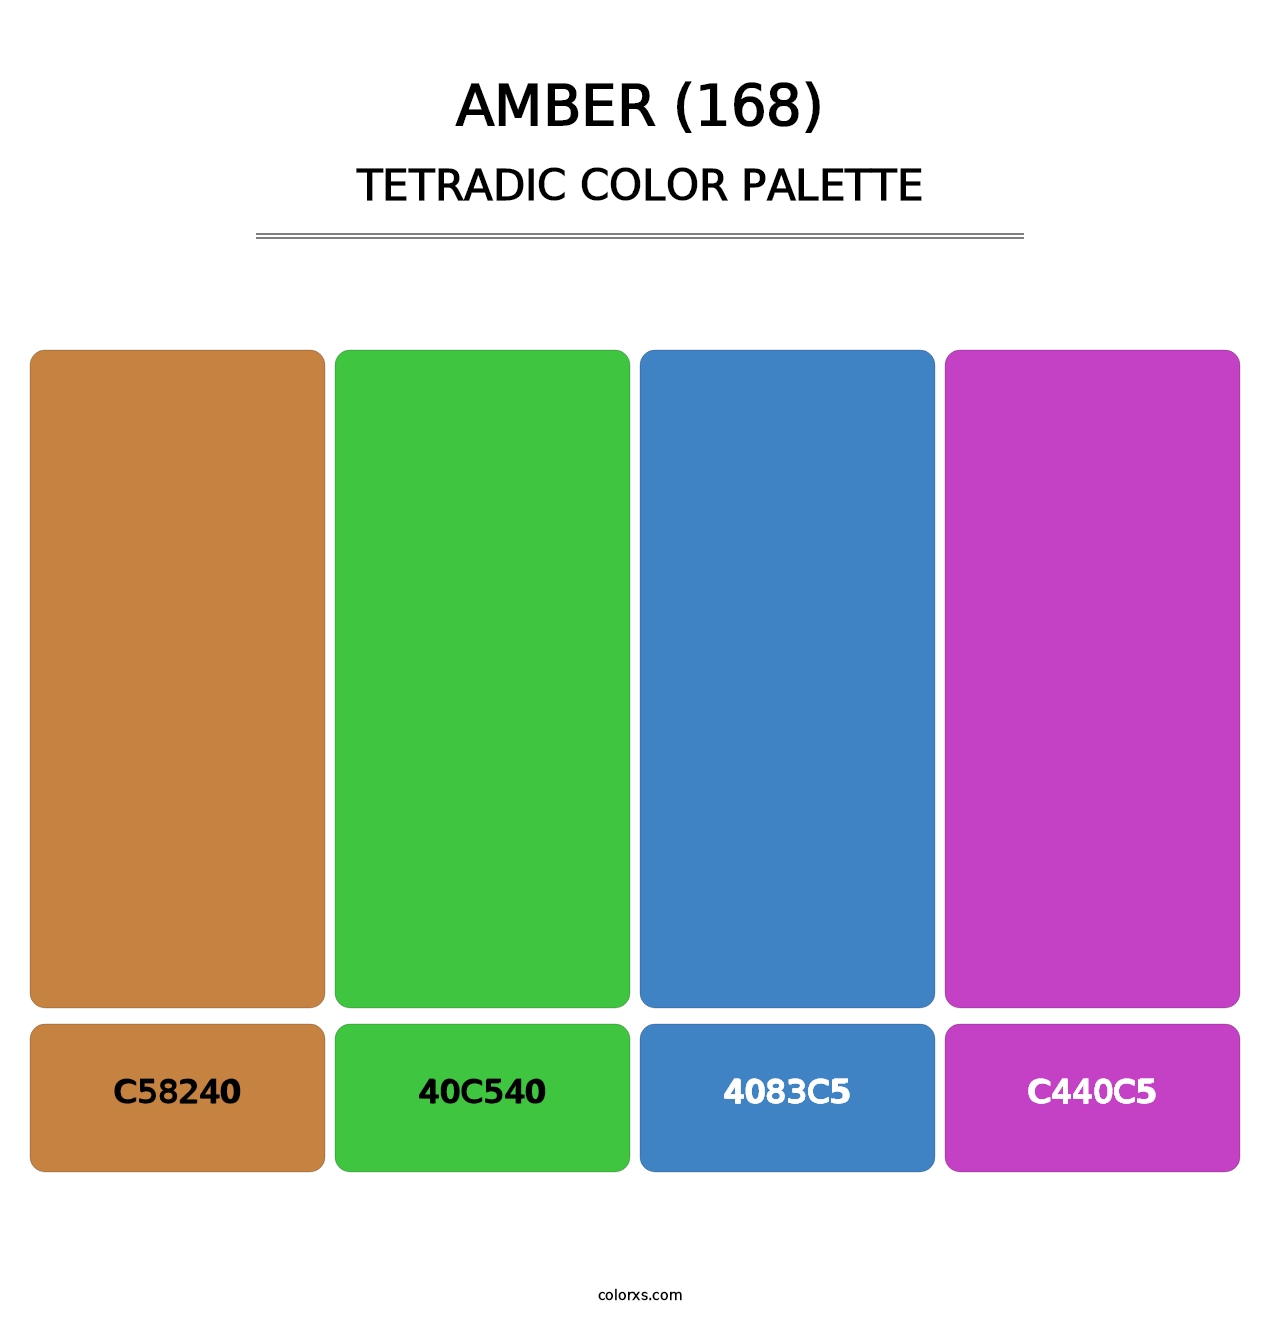 Amber (168) - Tetradic Color Palette